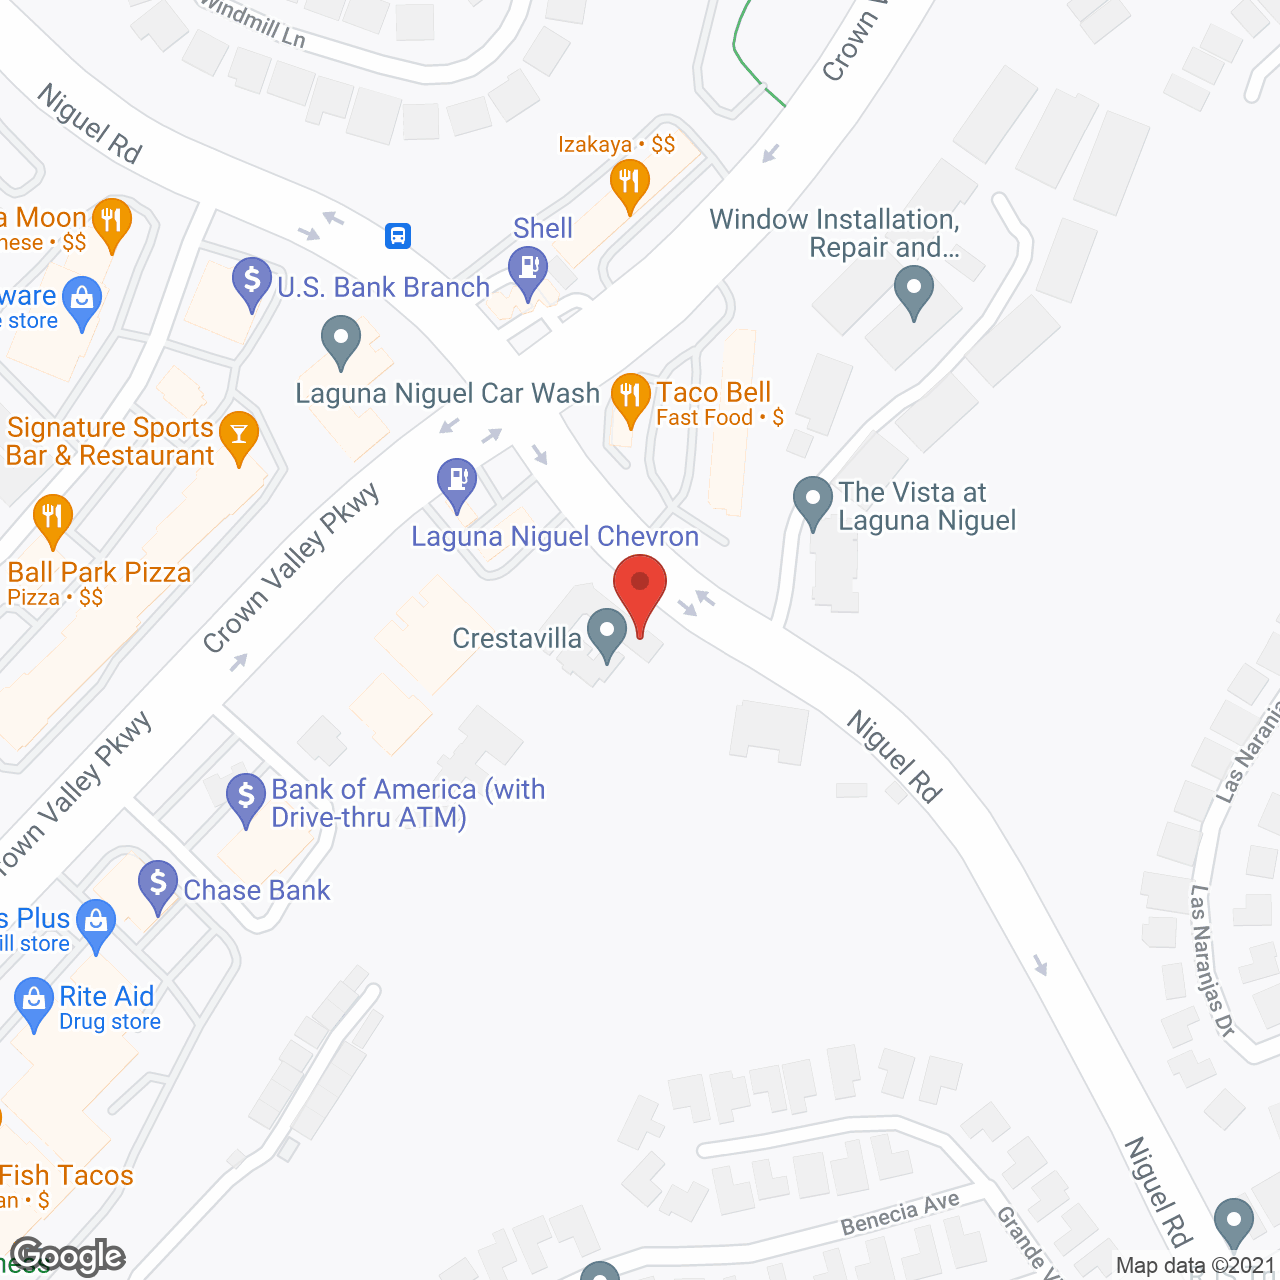 Crestavilla in google map